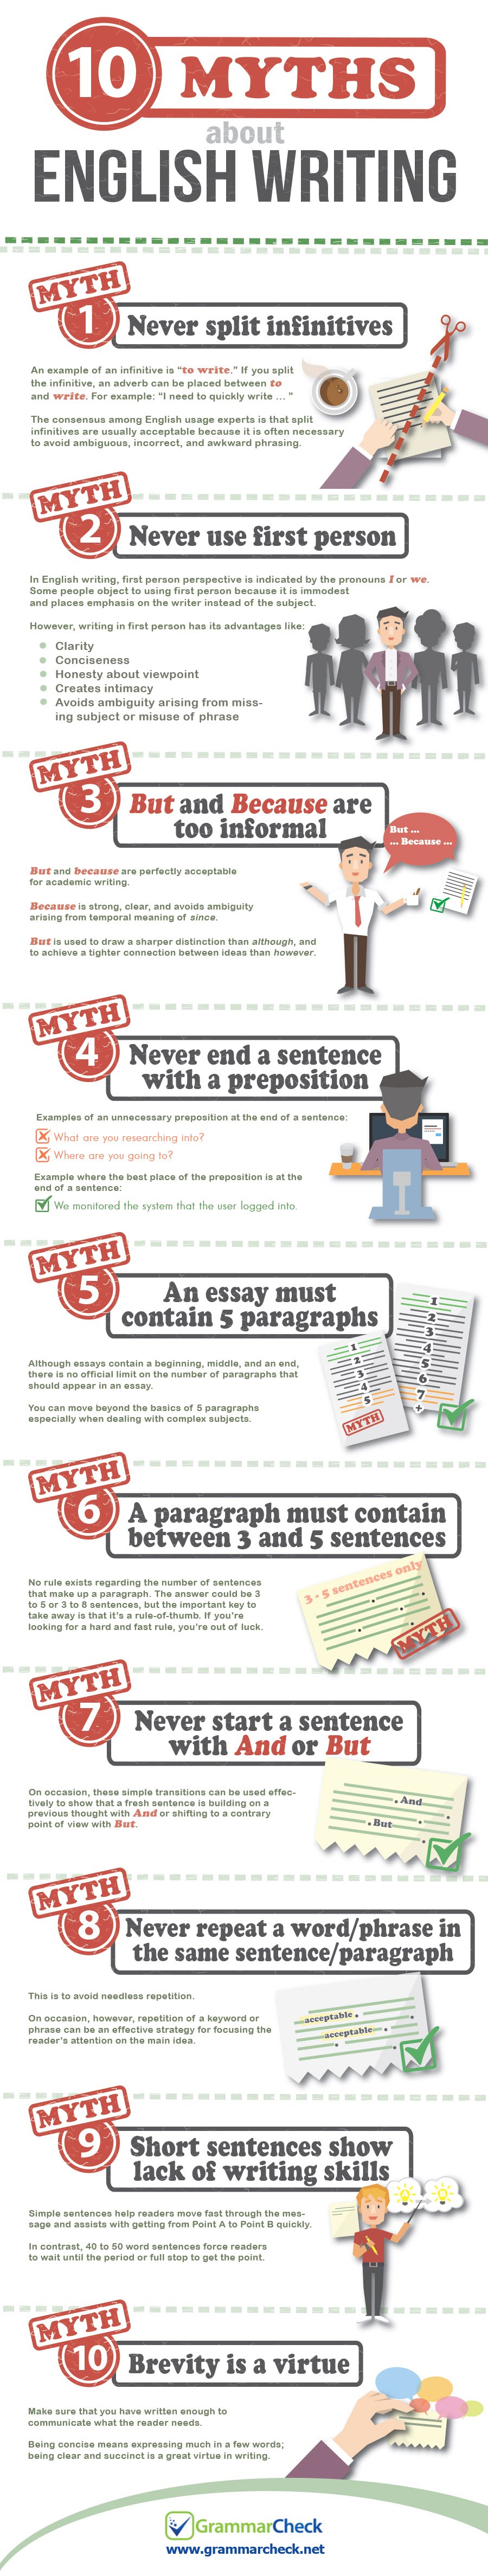 10 Myths about English Writing